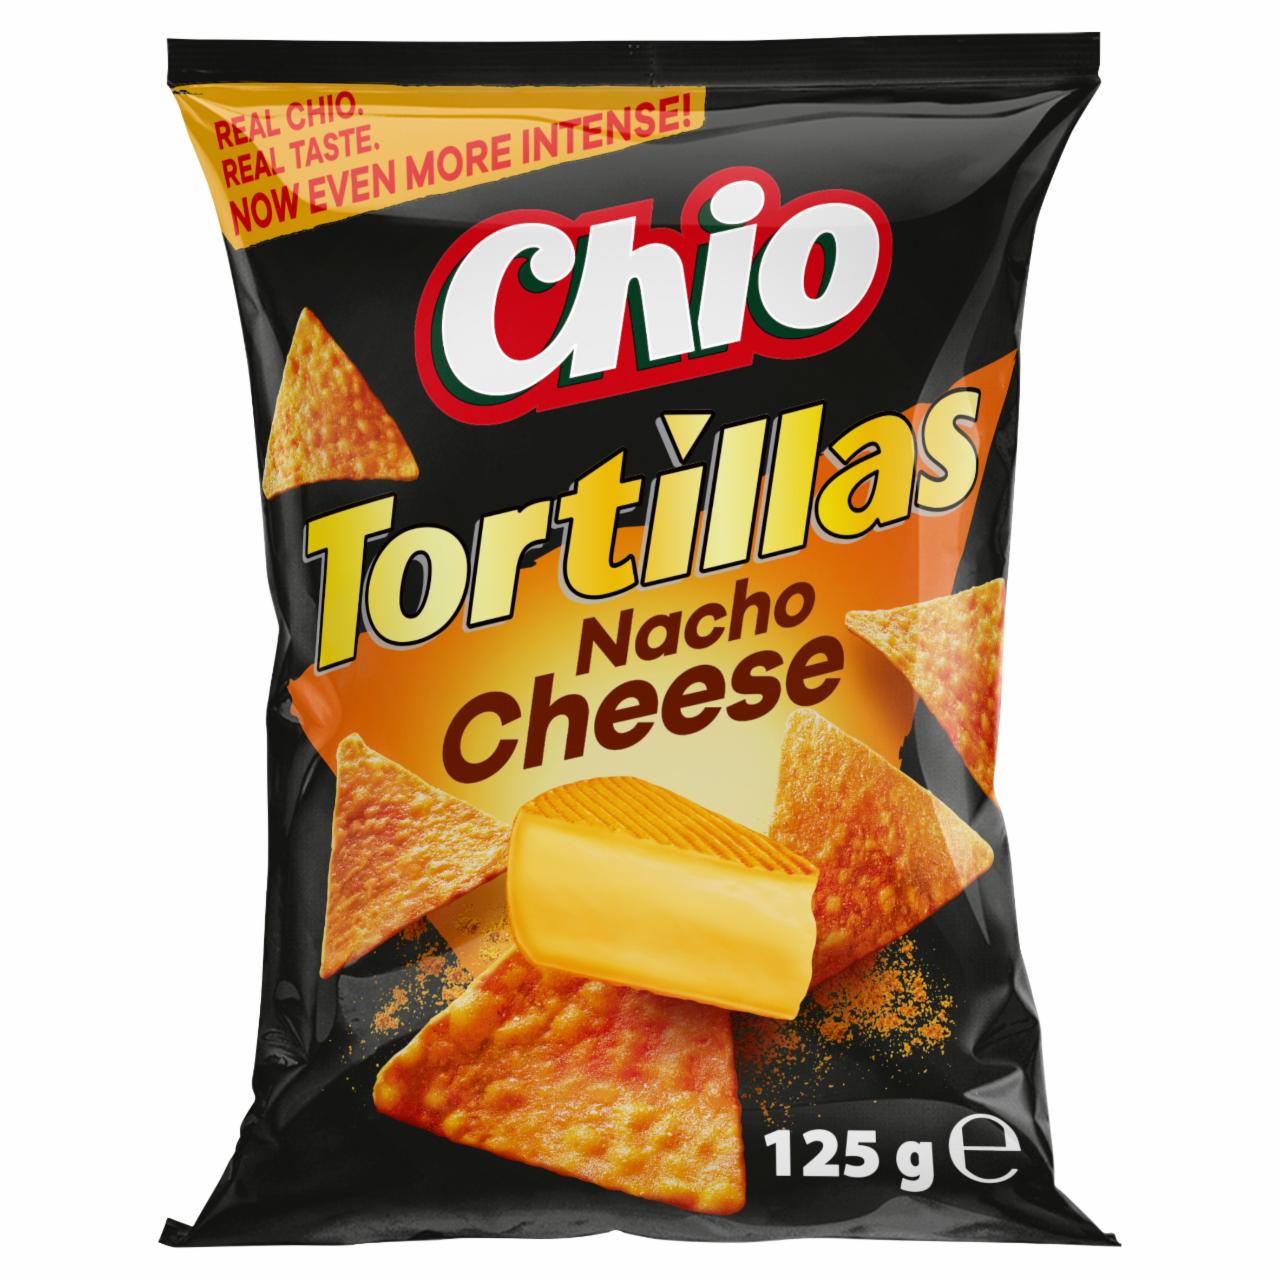 Képek - Chio Tortillas sajtos kukoricasnack 125 g